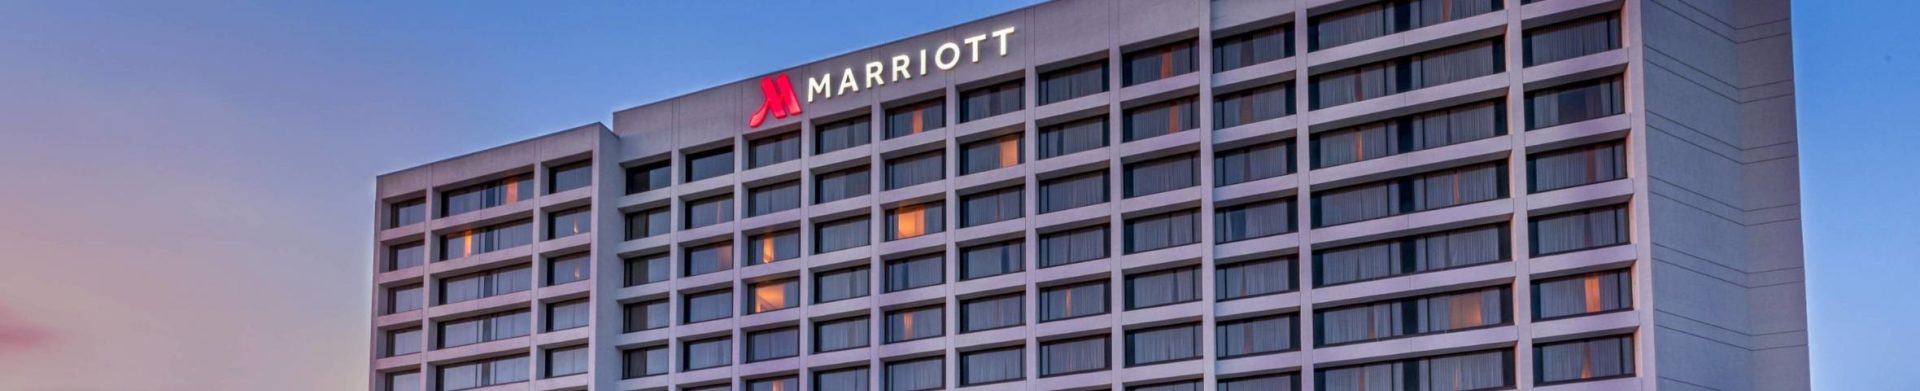 a Marriott hotel building